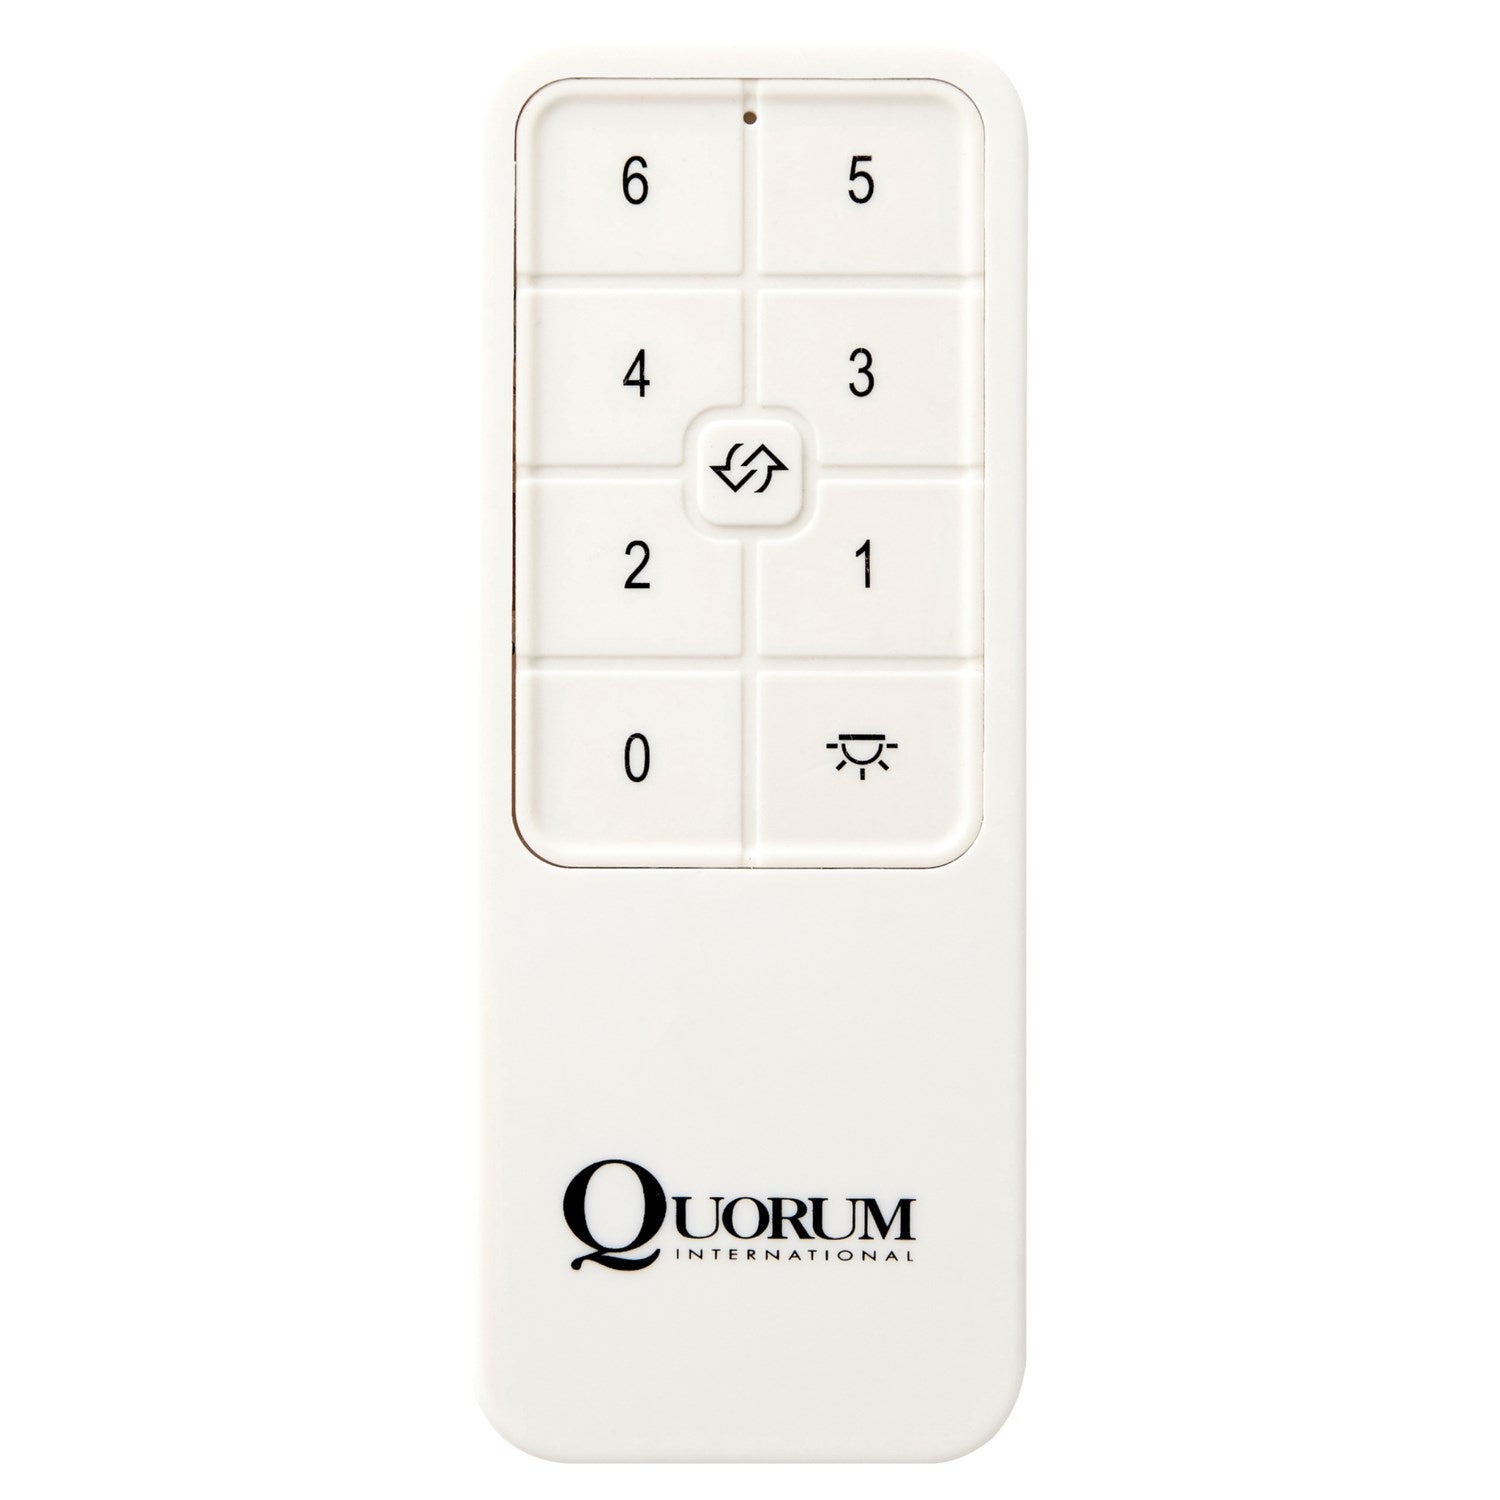 Quorum - 7-1306-6 - Wall Control - Fan Controls - White